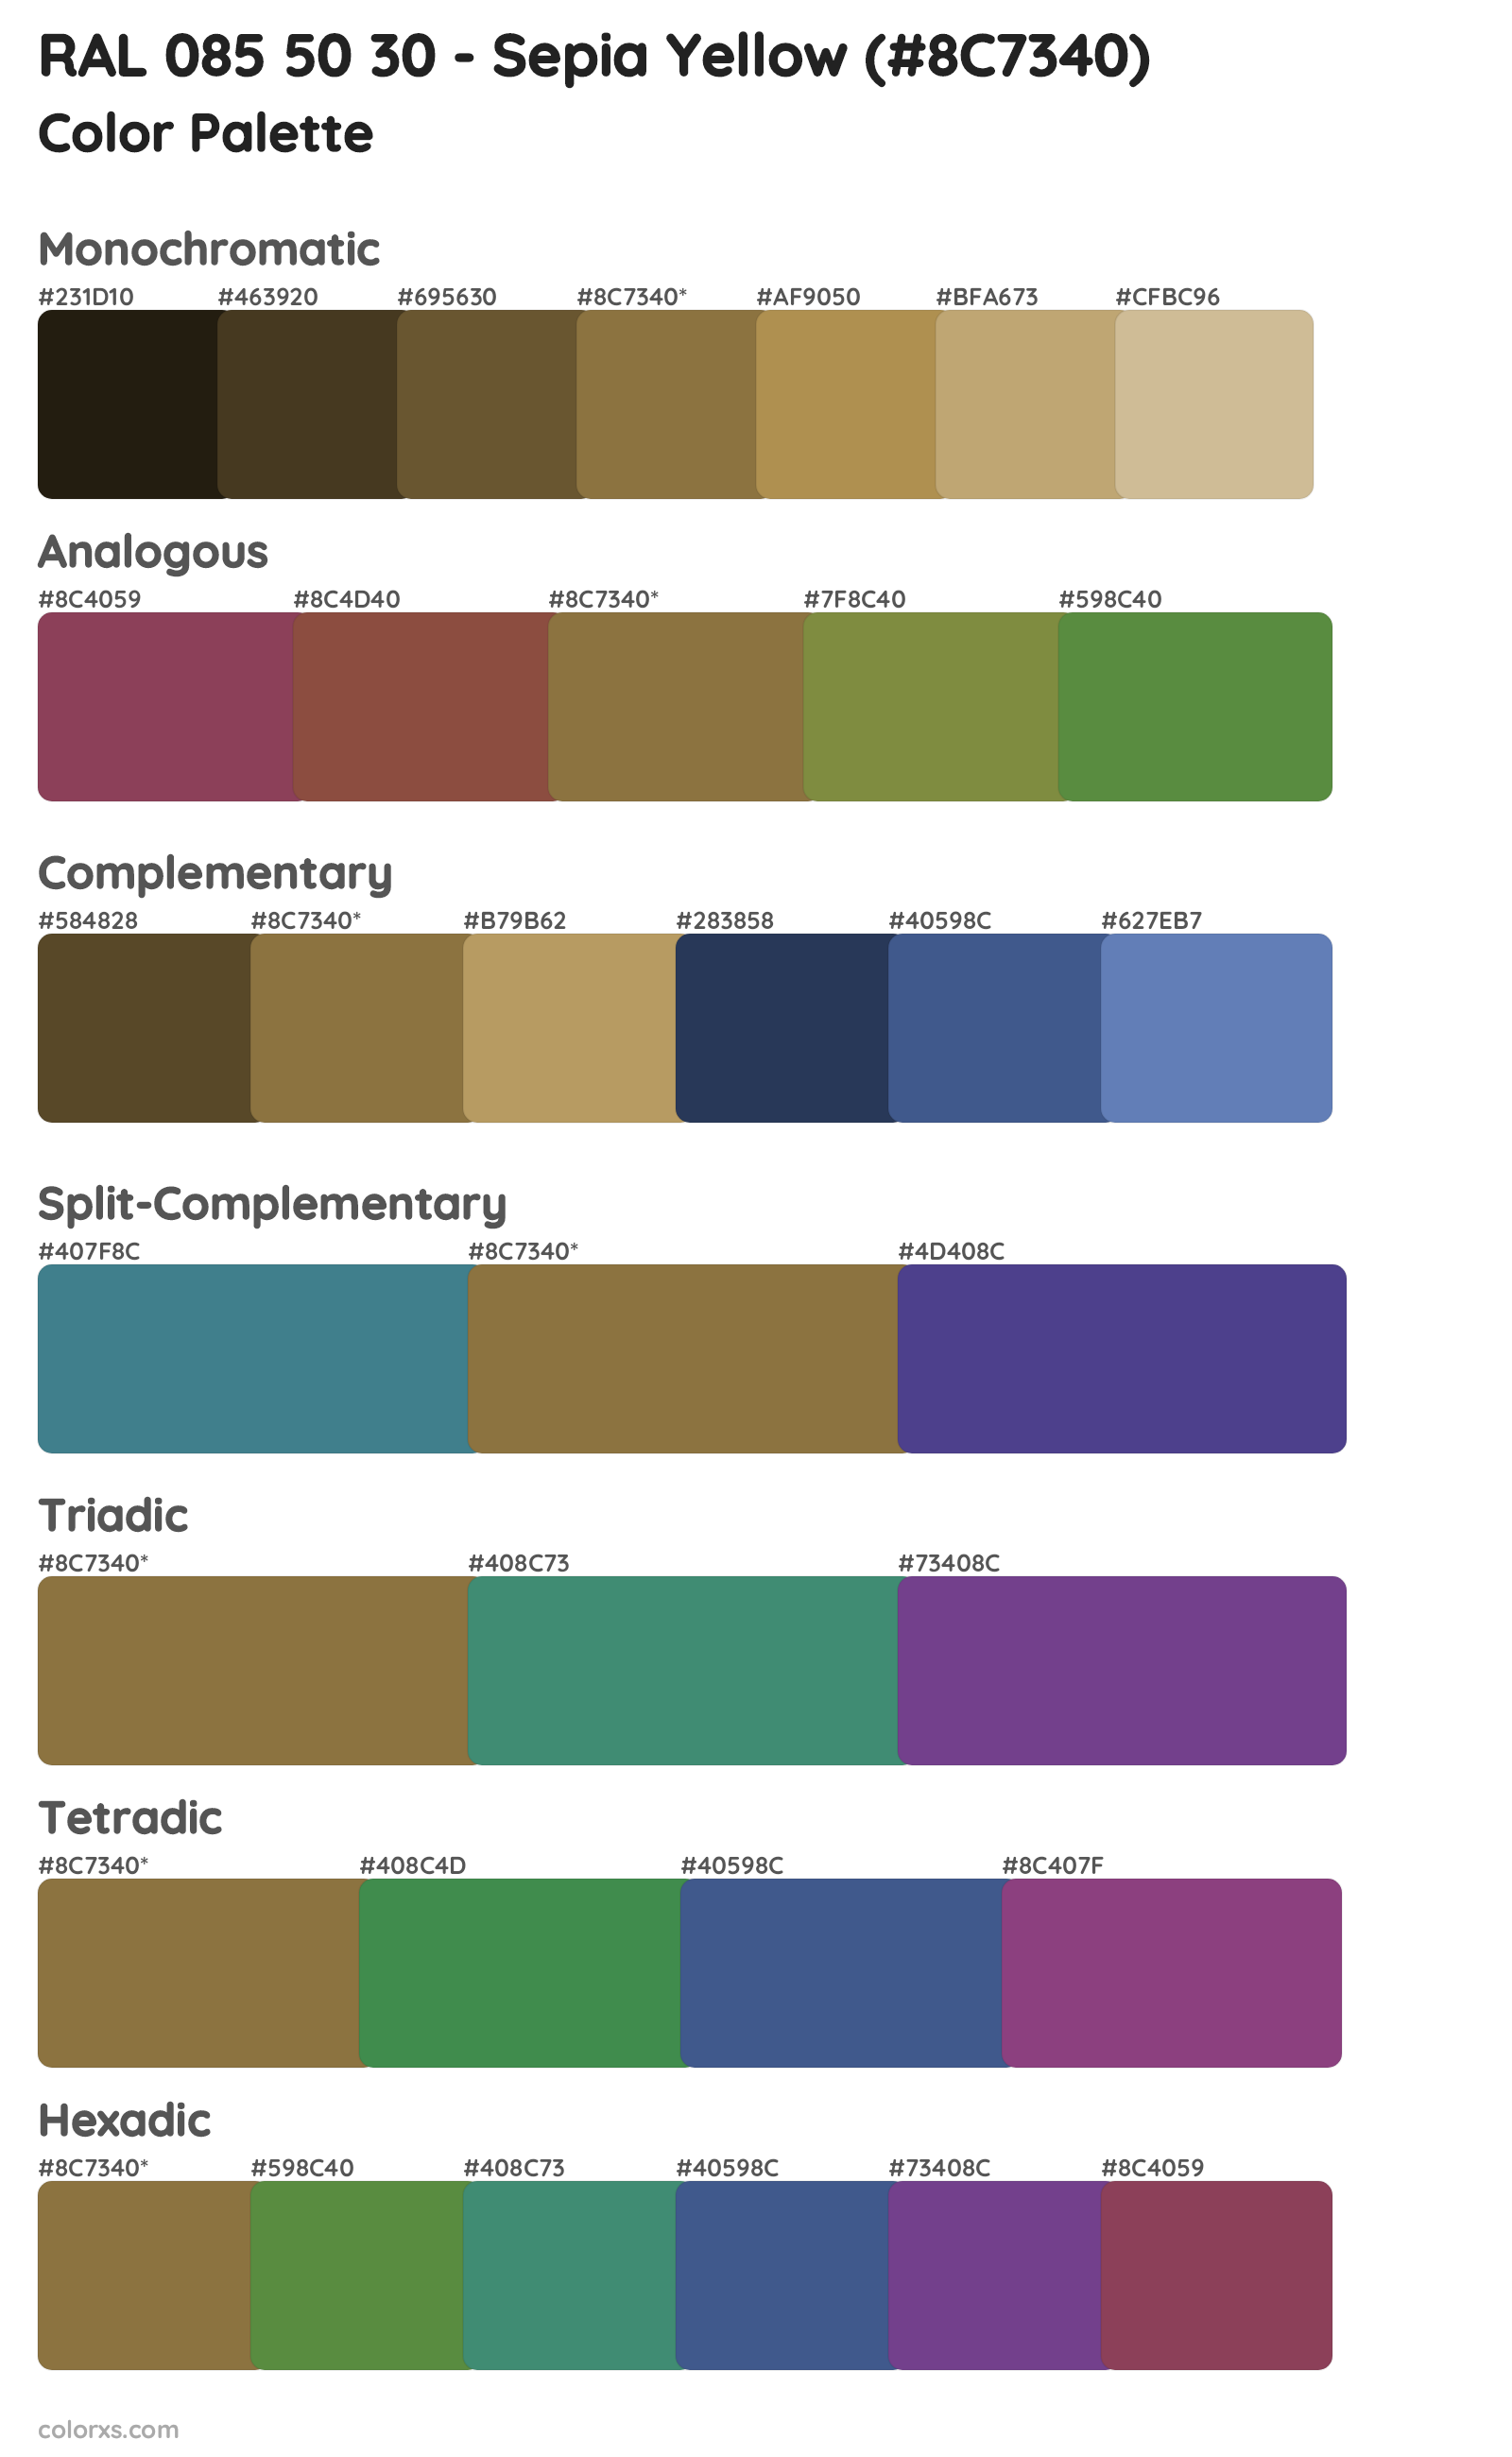 RAL 085 50 30 - Sepia Yellow Color Scheme Palettes